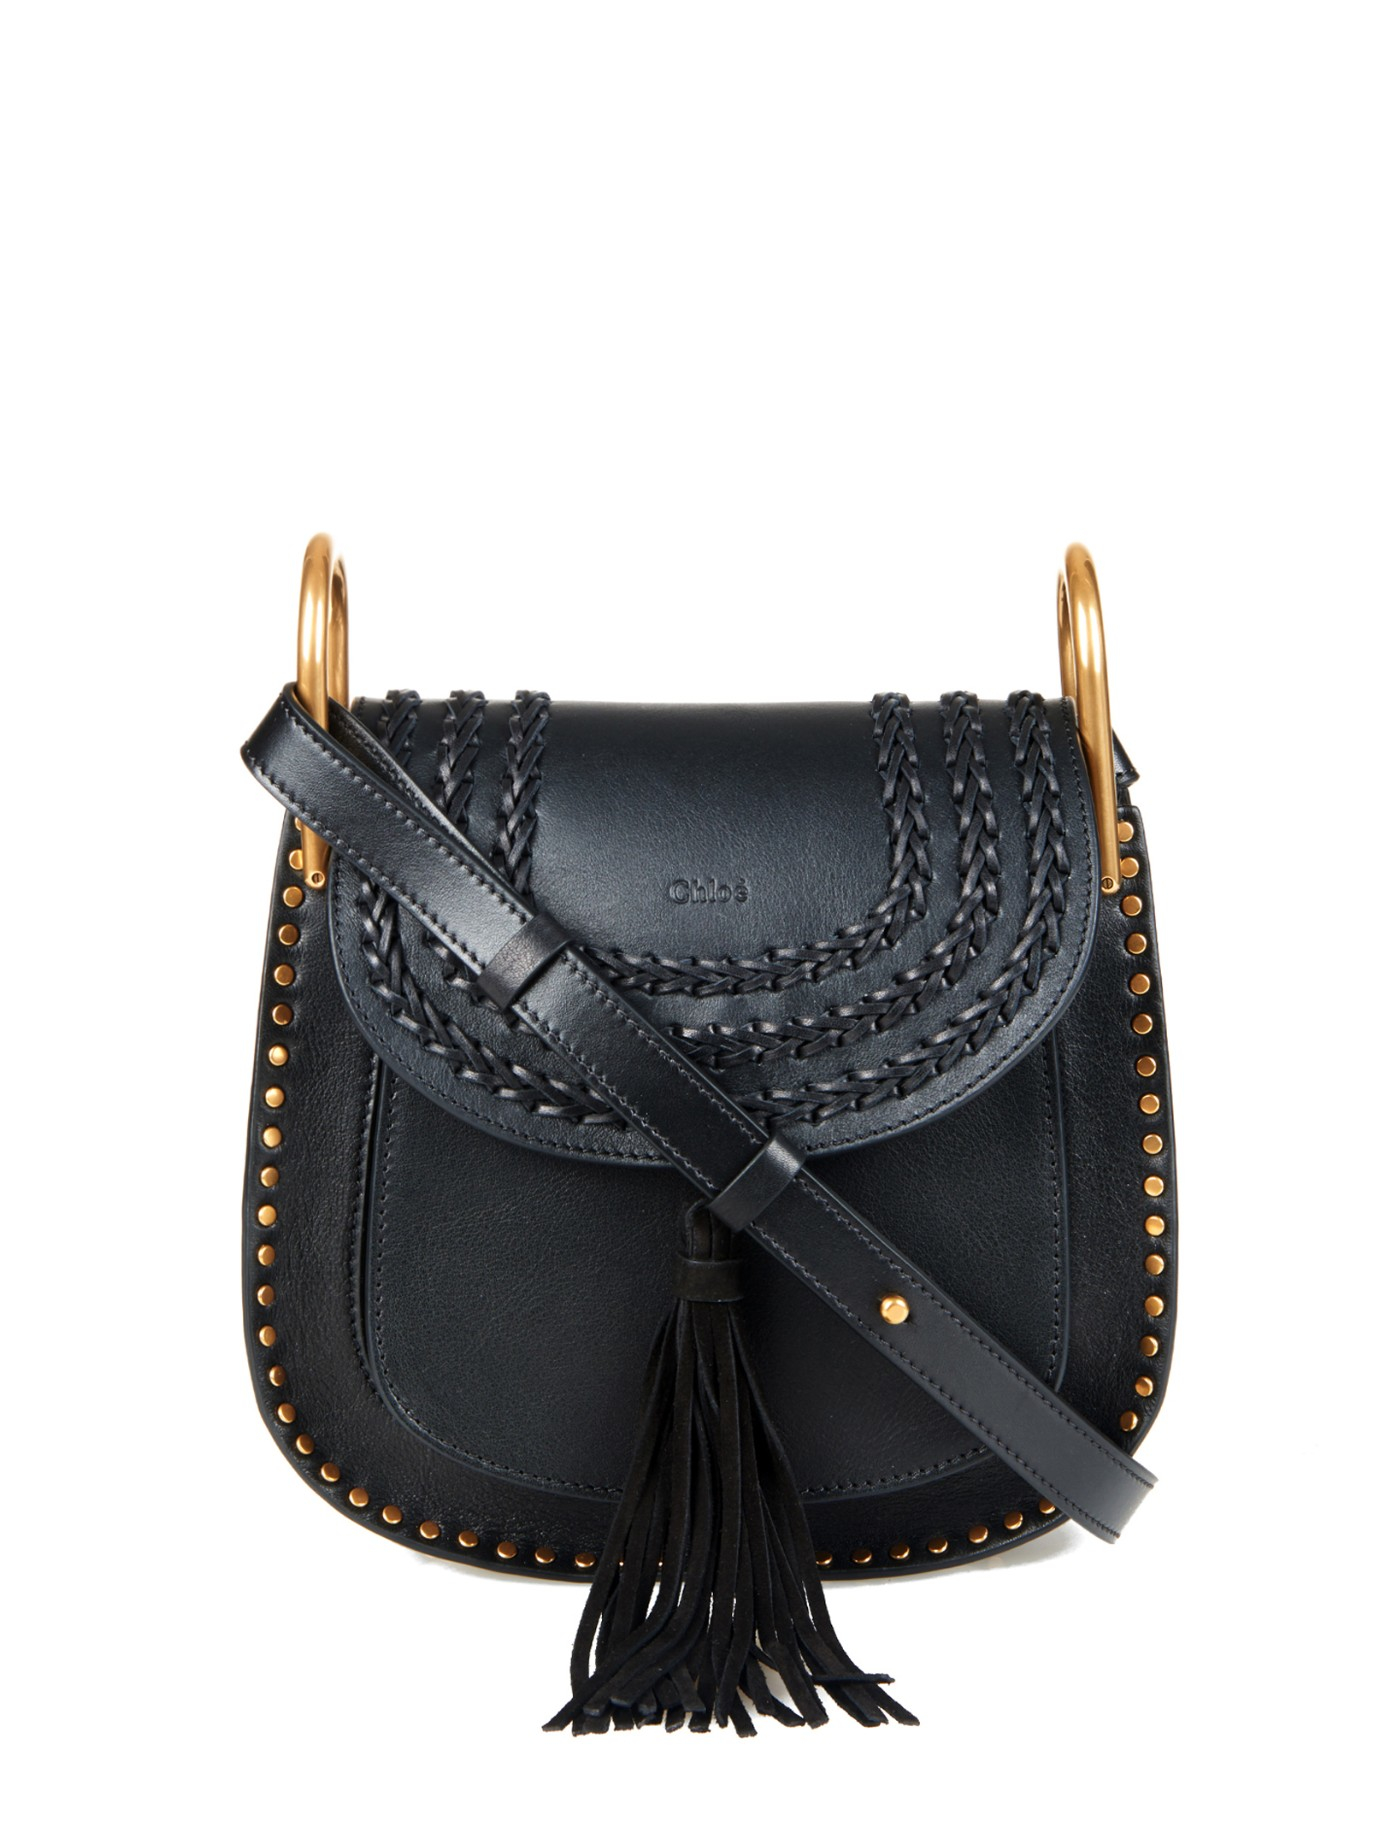 chloe black handbag - Chlo Small Hudson Shoulder Bag in Black | Lyst